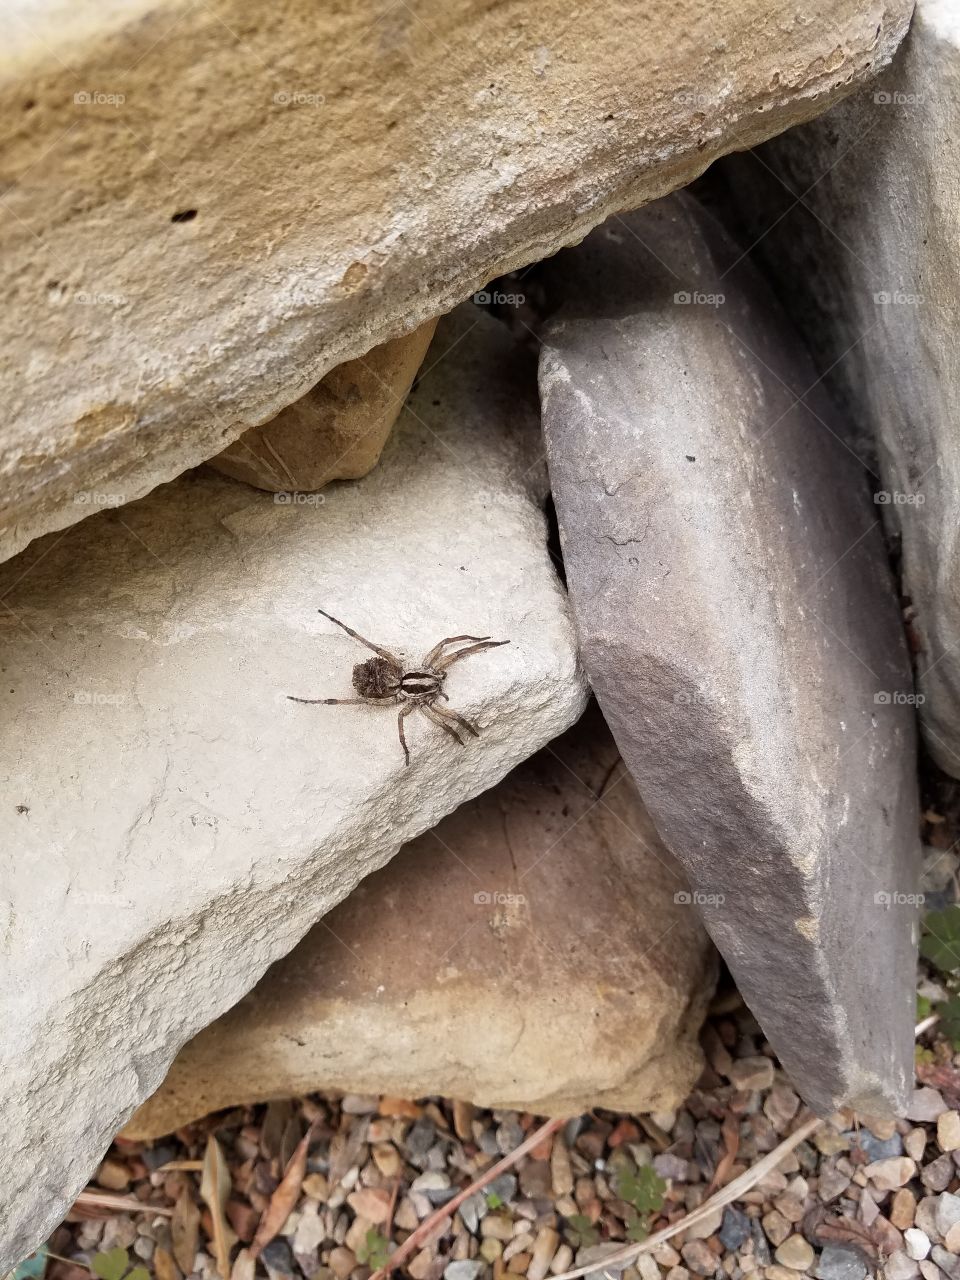 Brown, leggy spider on gray rocks